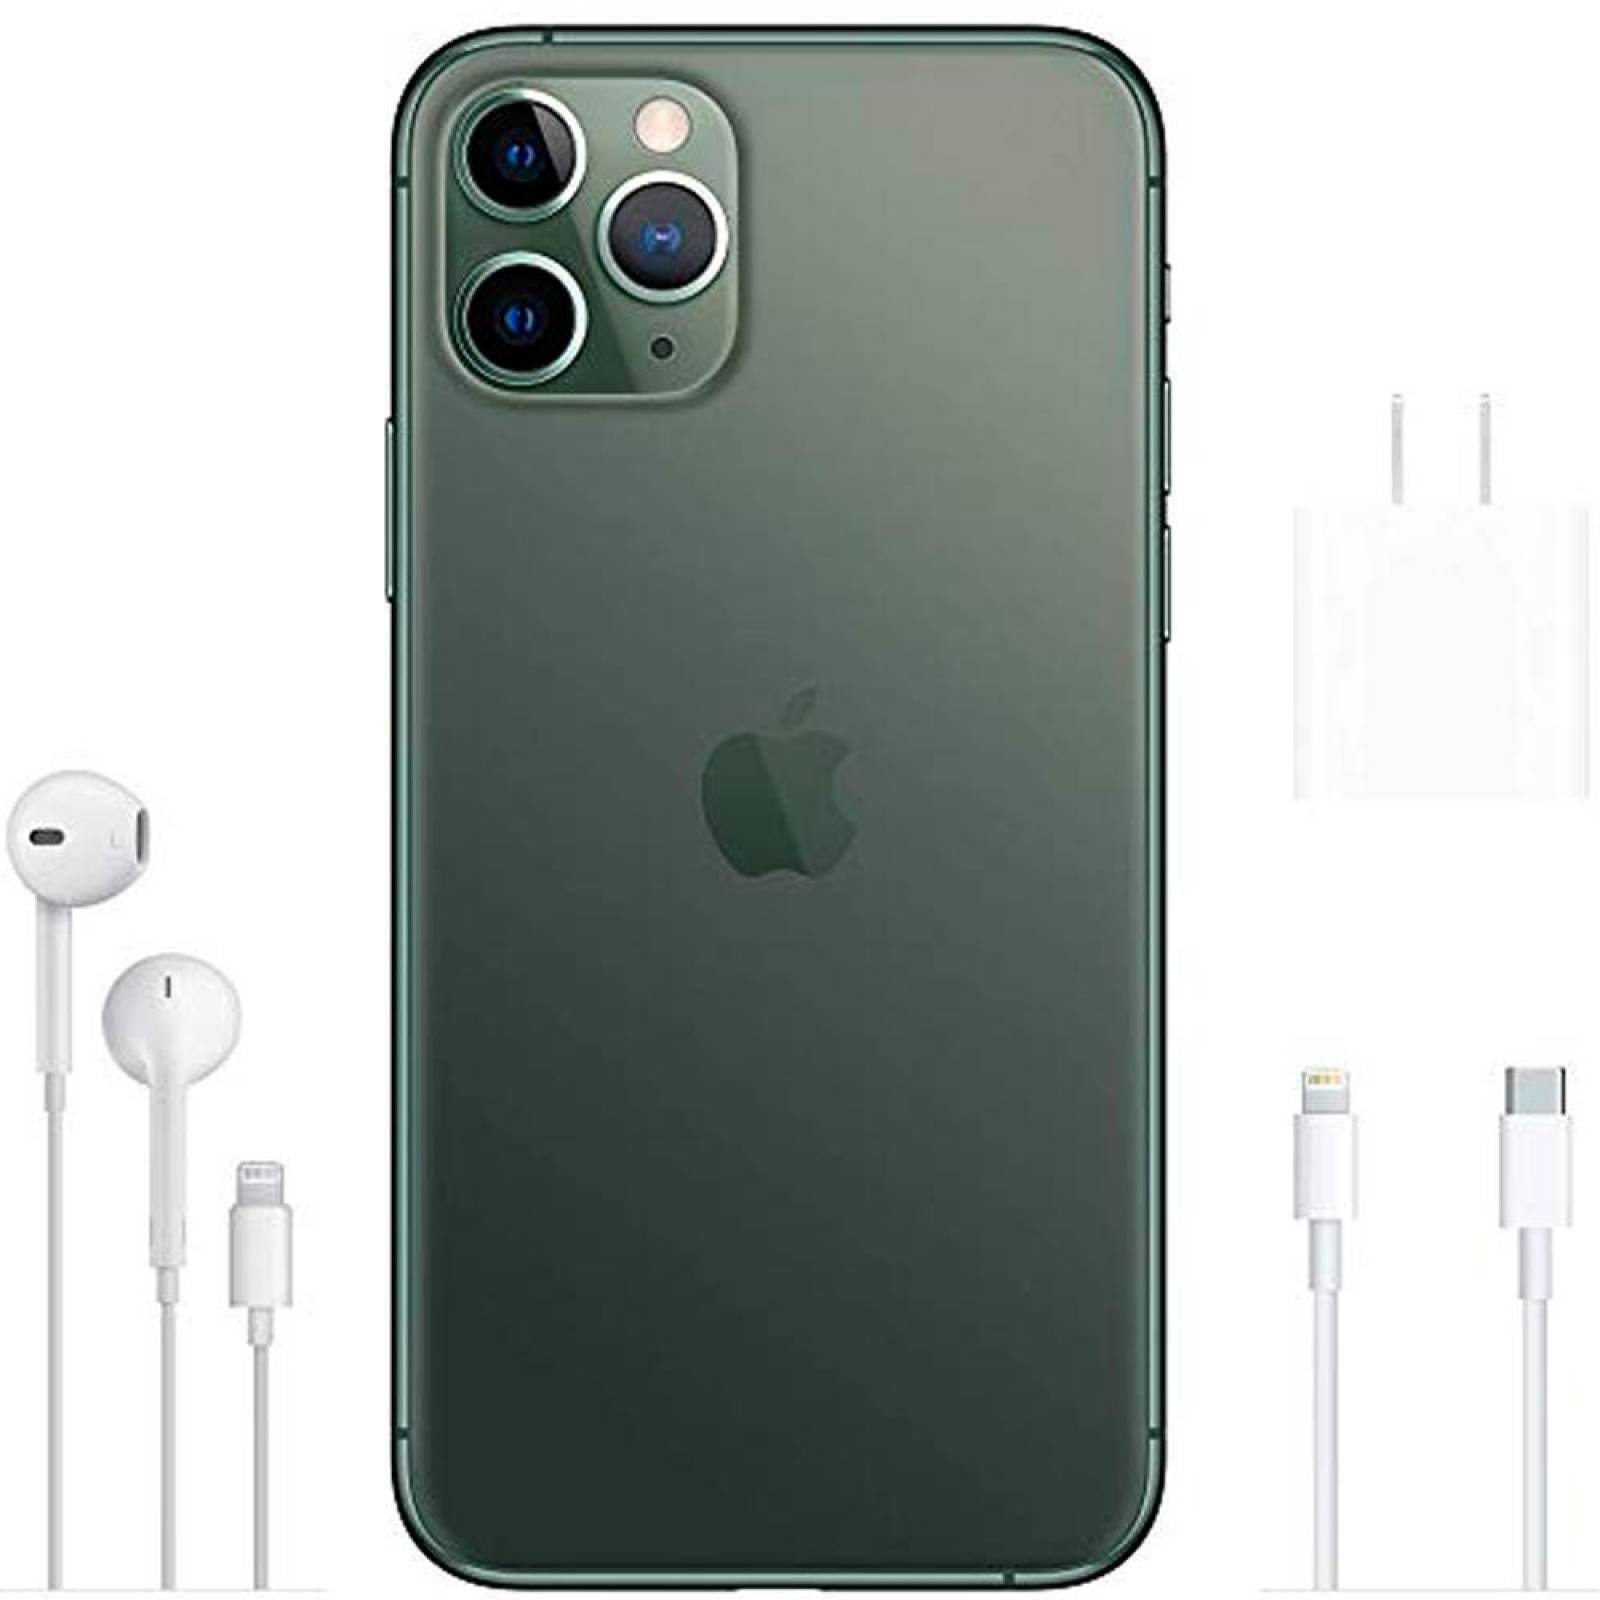 Celular APPLE iPhone 11 Pro 4GB 64GB iOS 13 Green MWCL2LL/A Open Box 